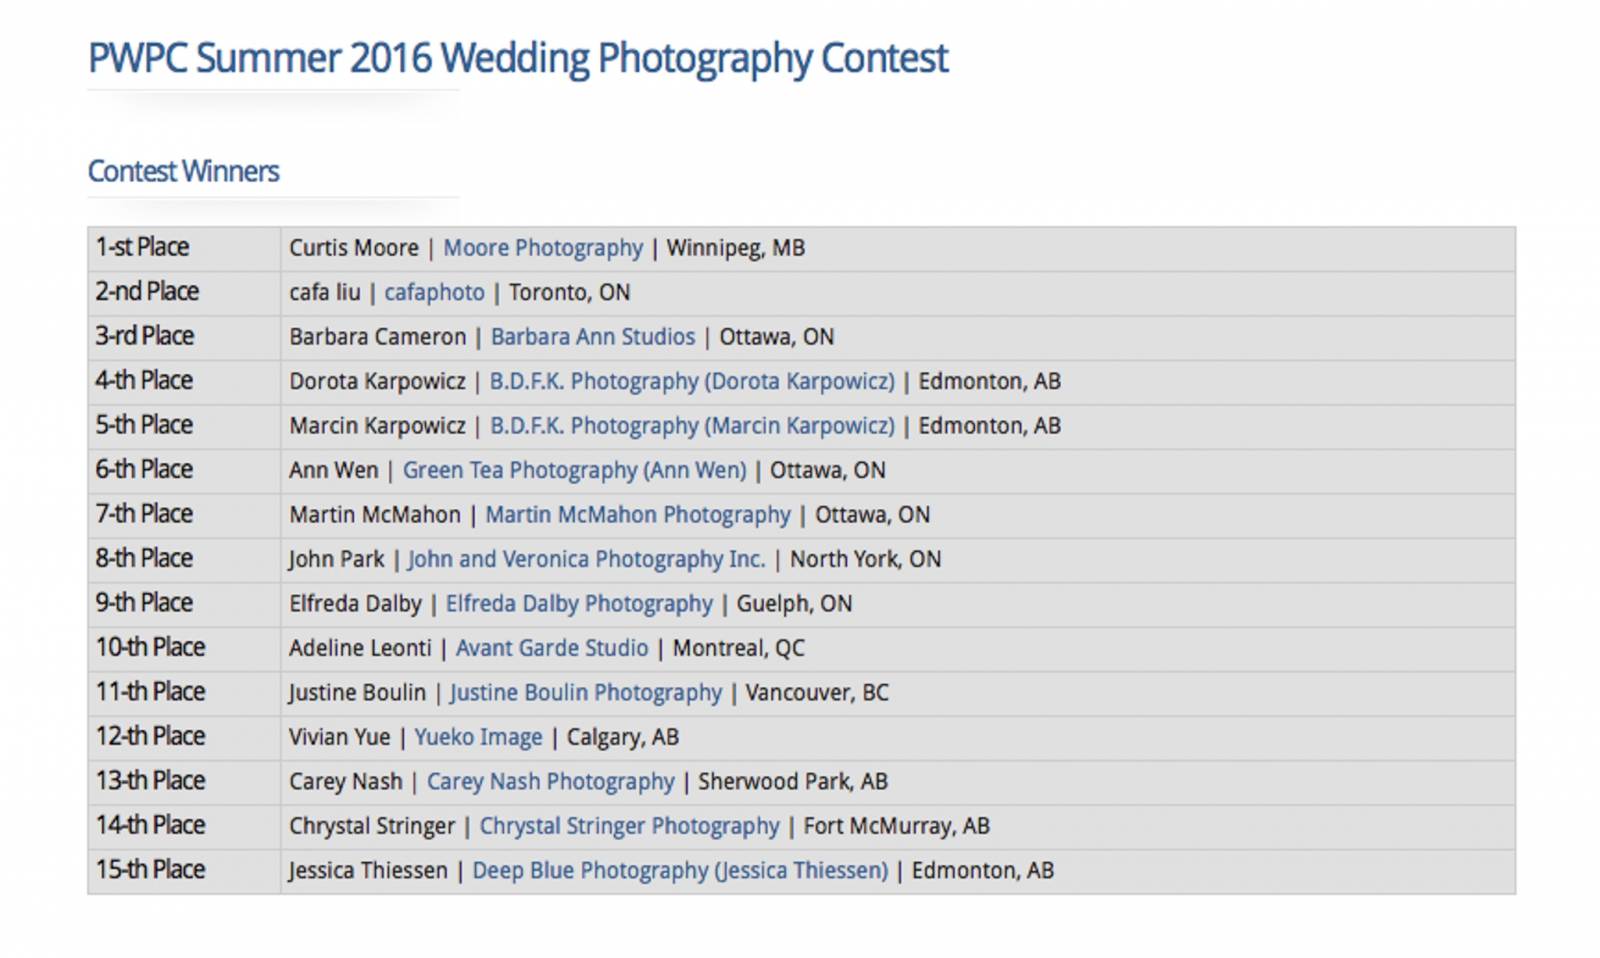 list of awarded Canadian photographers